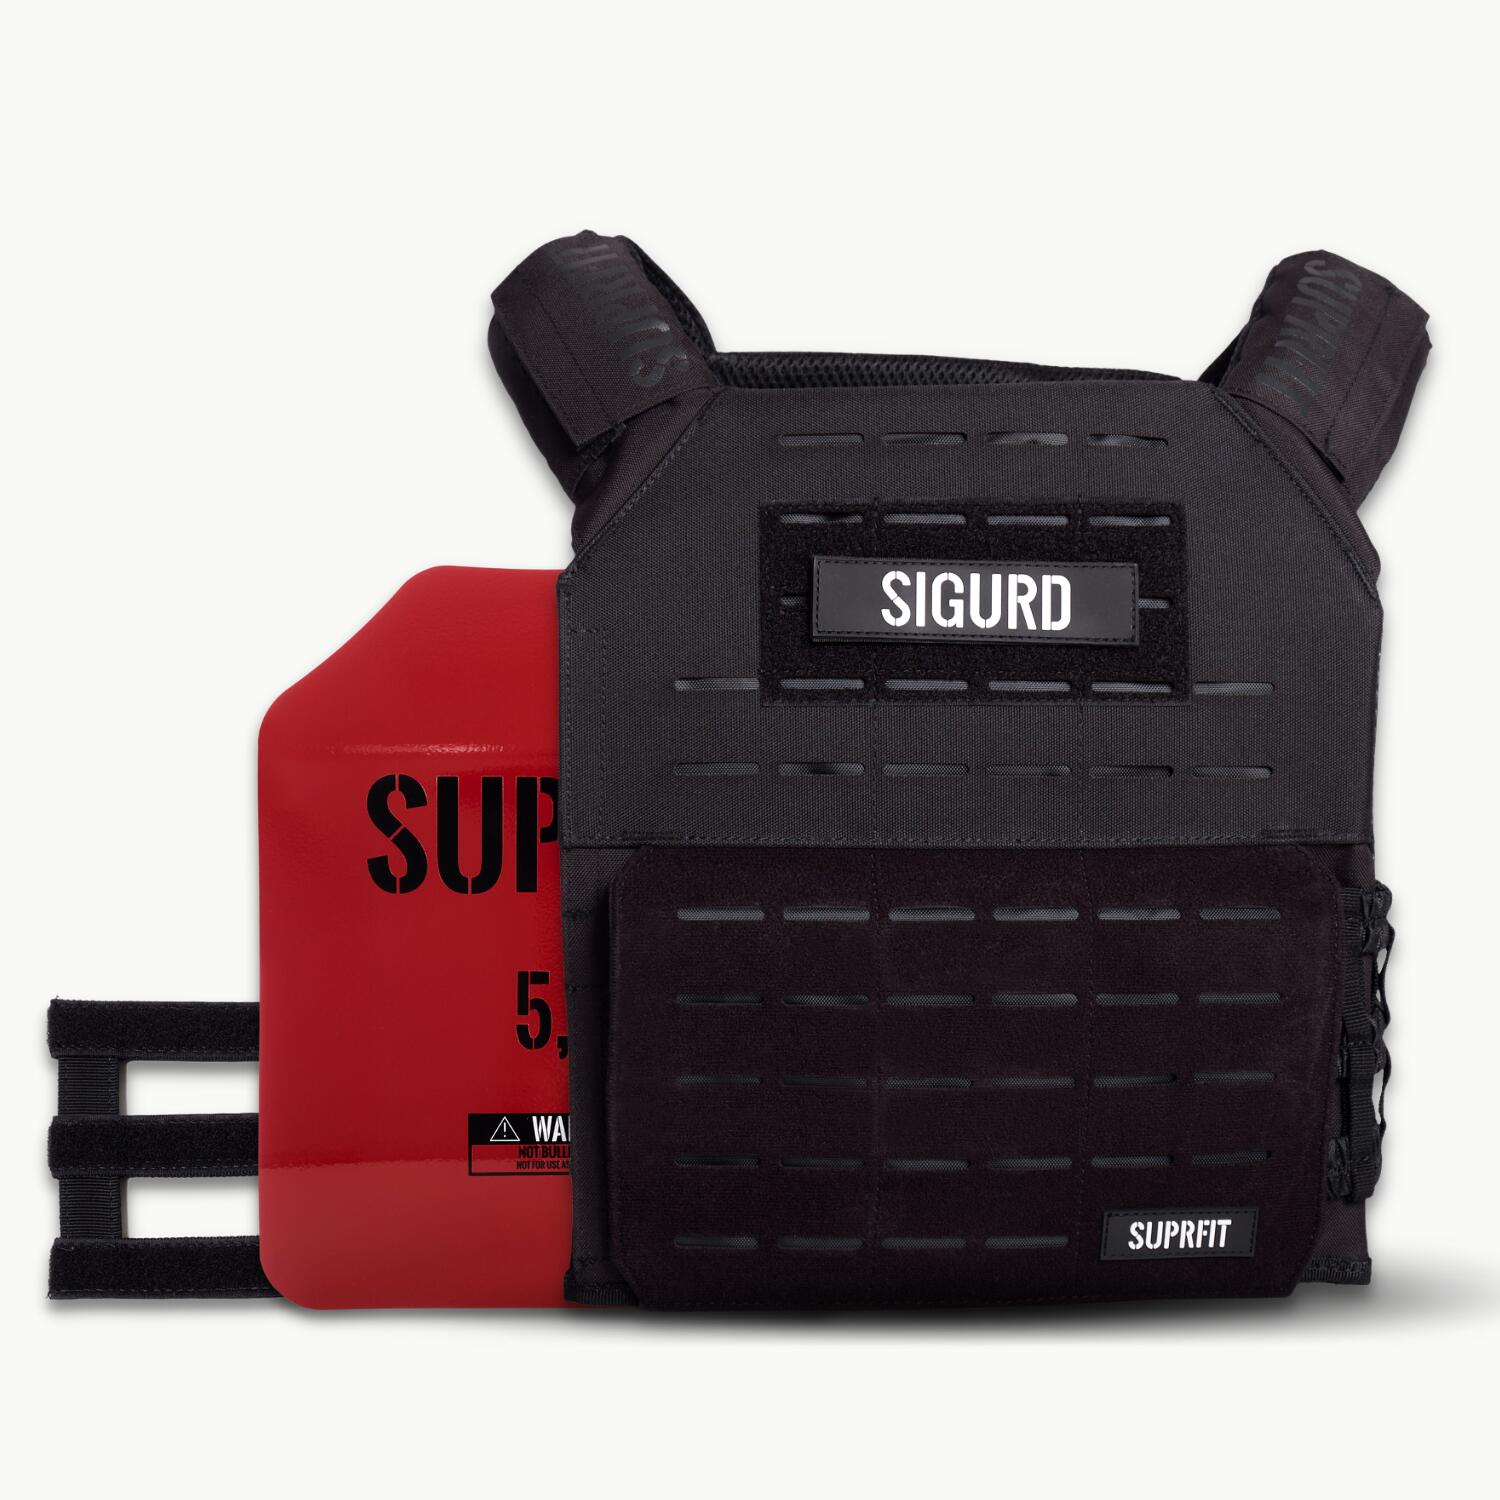 Suprfit Sigurd 3D Weight Vest - Black 5.75 lbs/Red